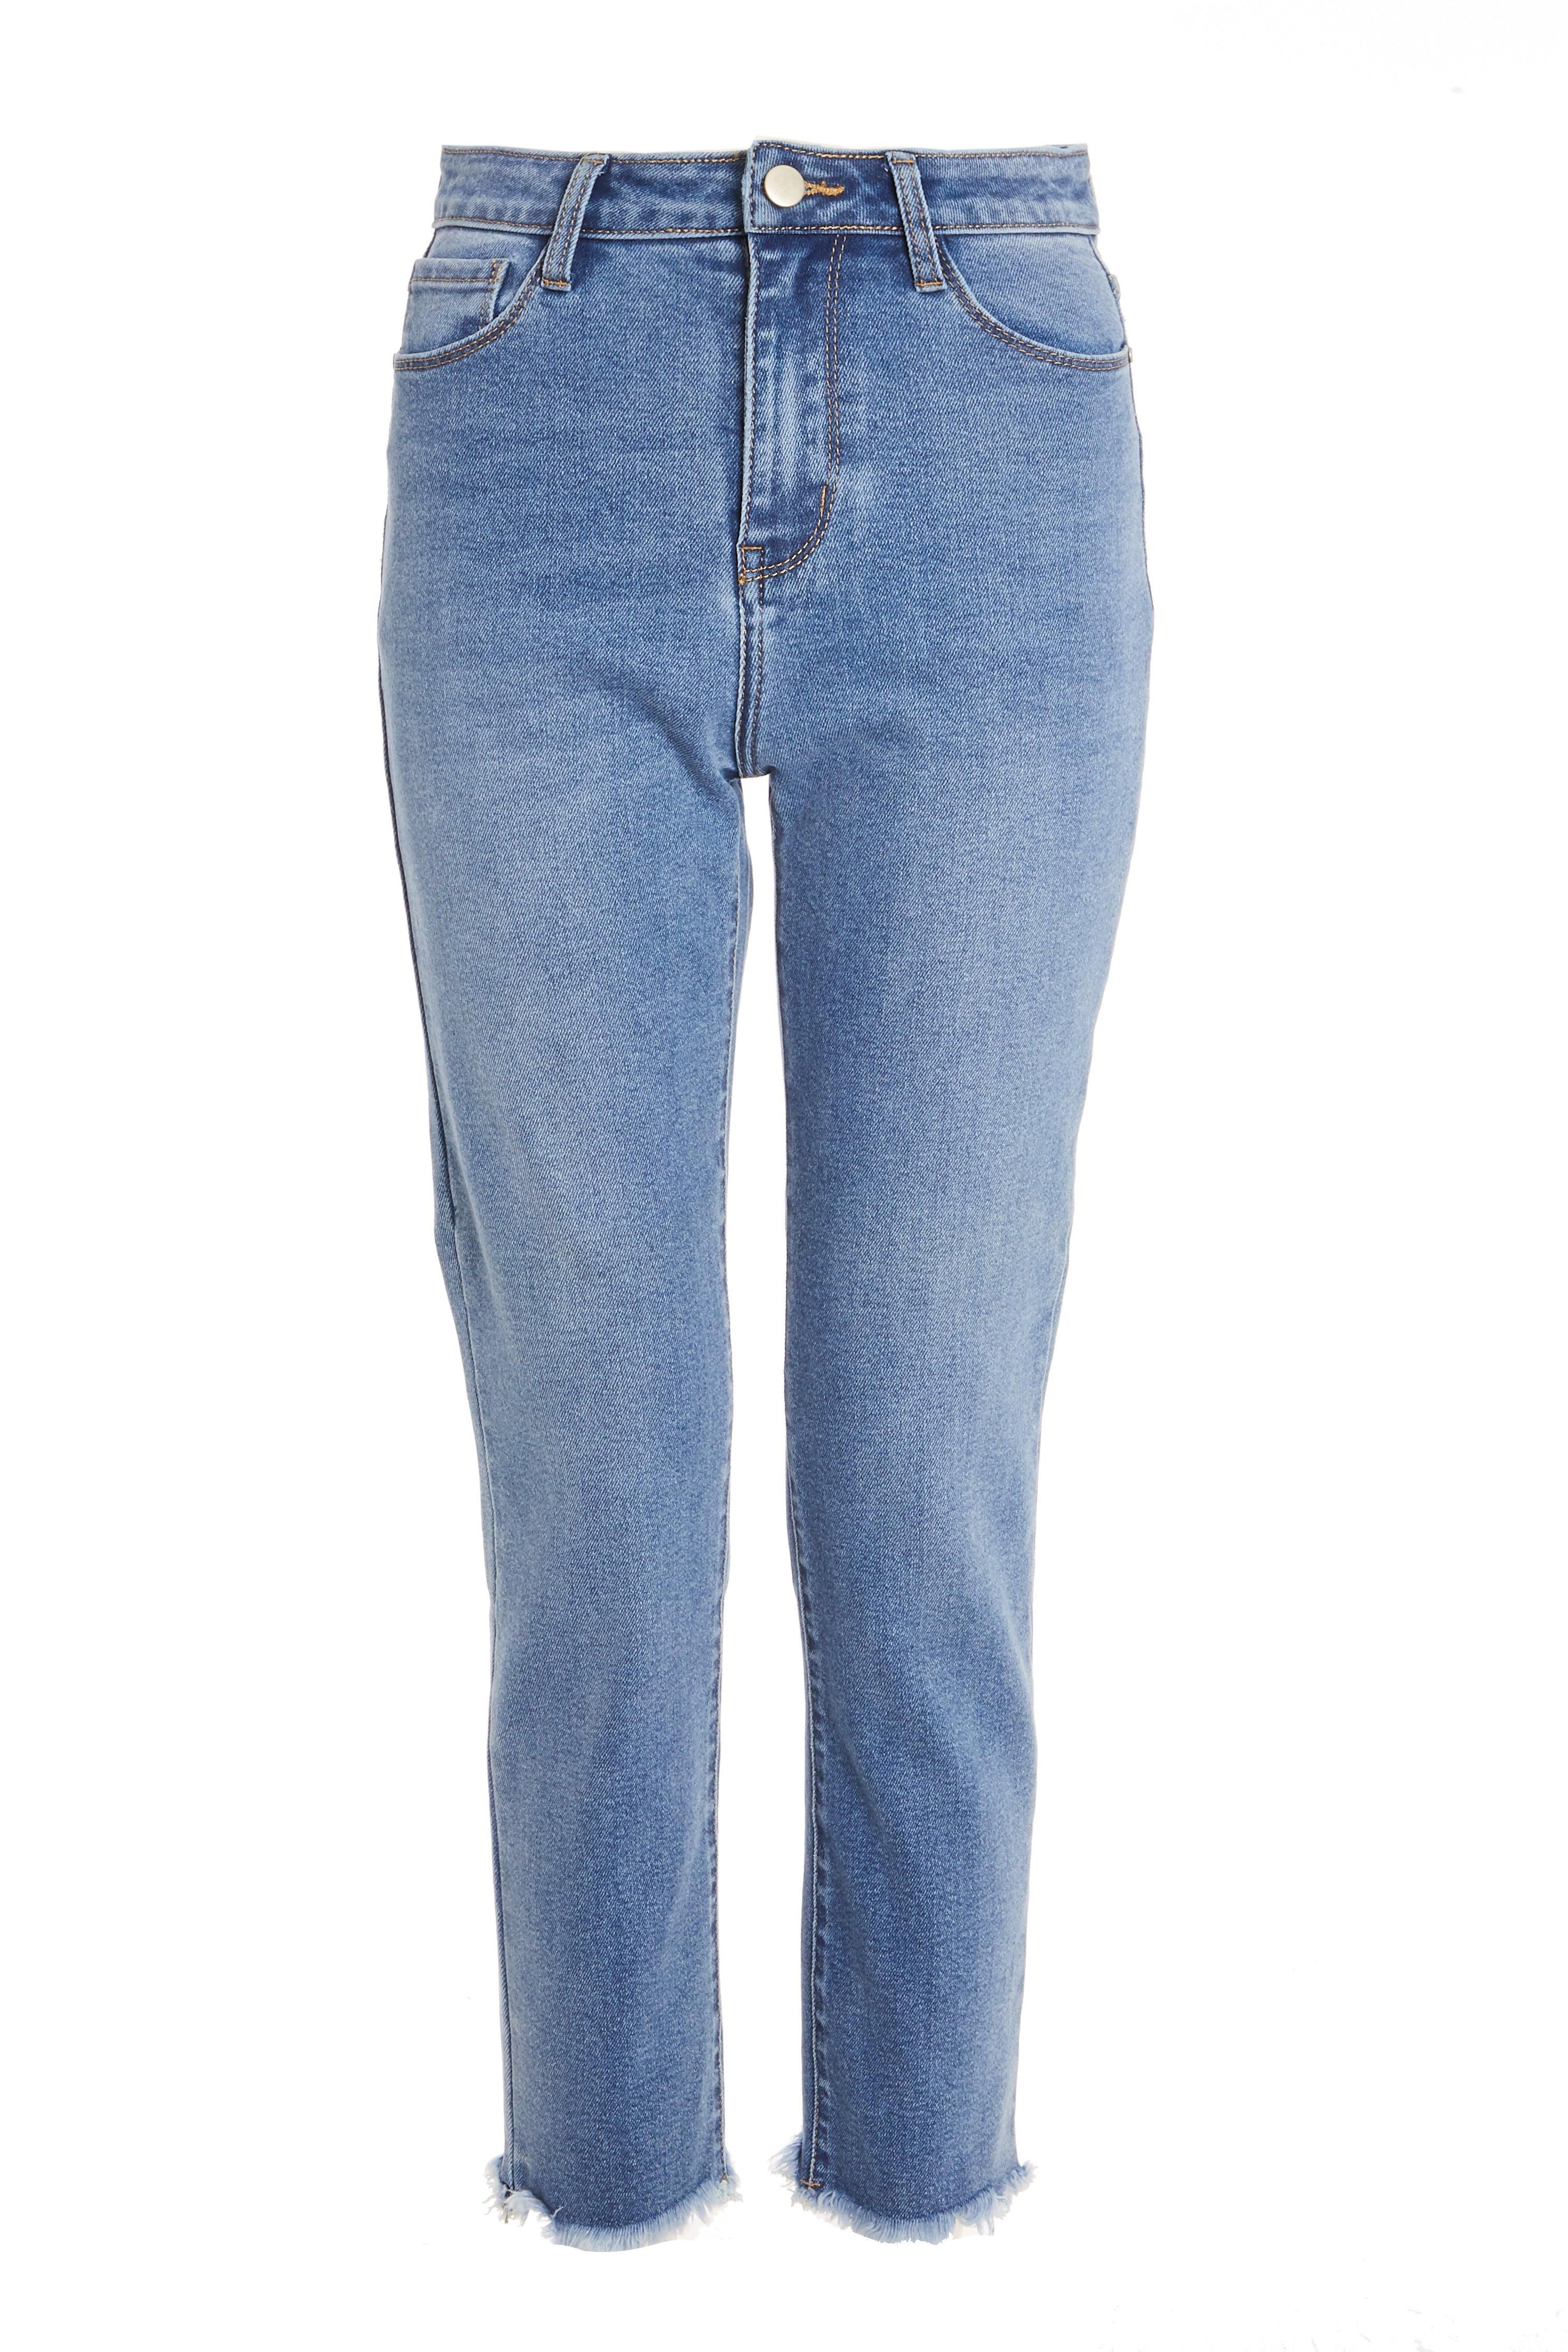 - Denim jeans   - Frayed hem  - High waist  - Stretch style   - Model Height: 5' 9